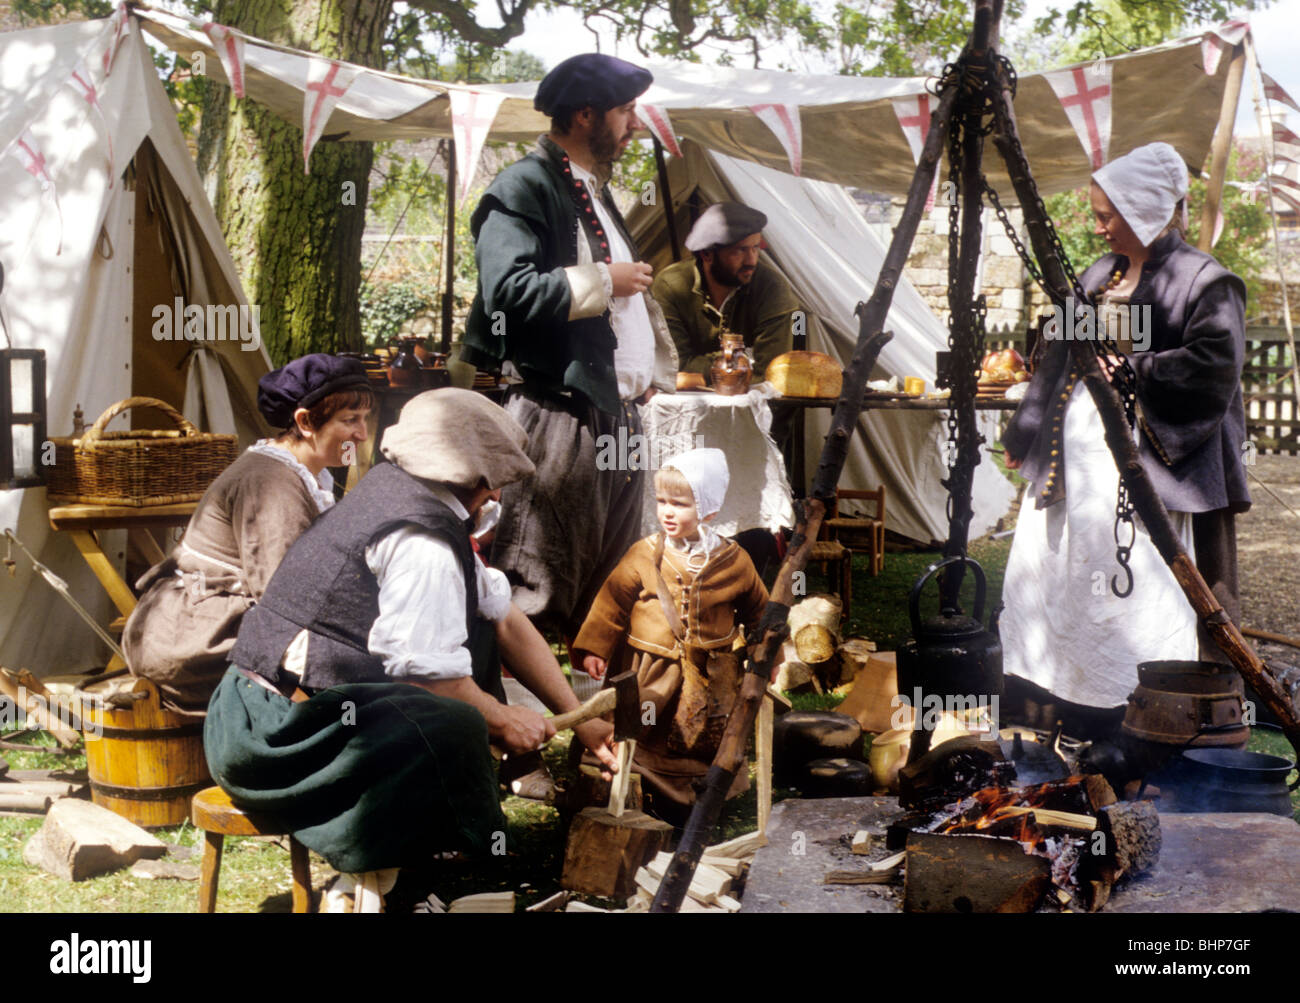 Reenactment, englischer Bürgerkrieg Periode Feldlager Geschichte Kostüm historische 17. Jahrhundert zivile Zivilisten Kochen Stockfoto